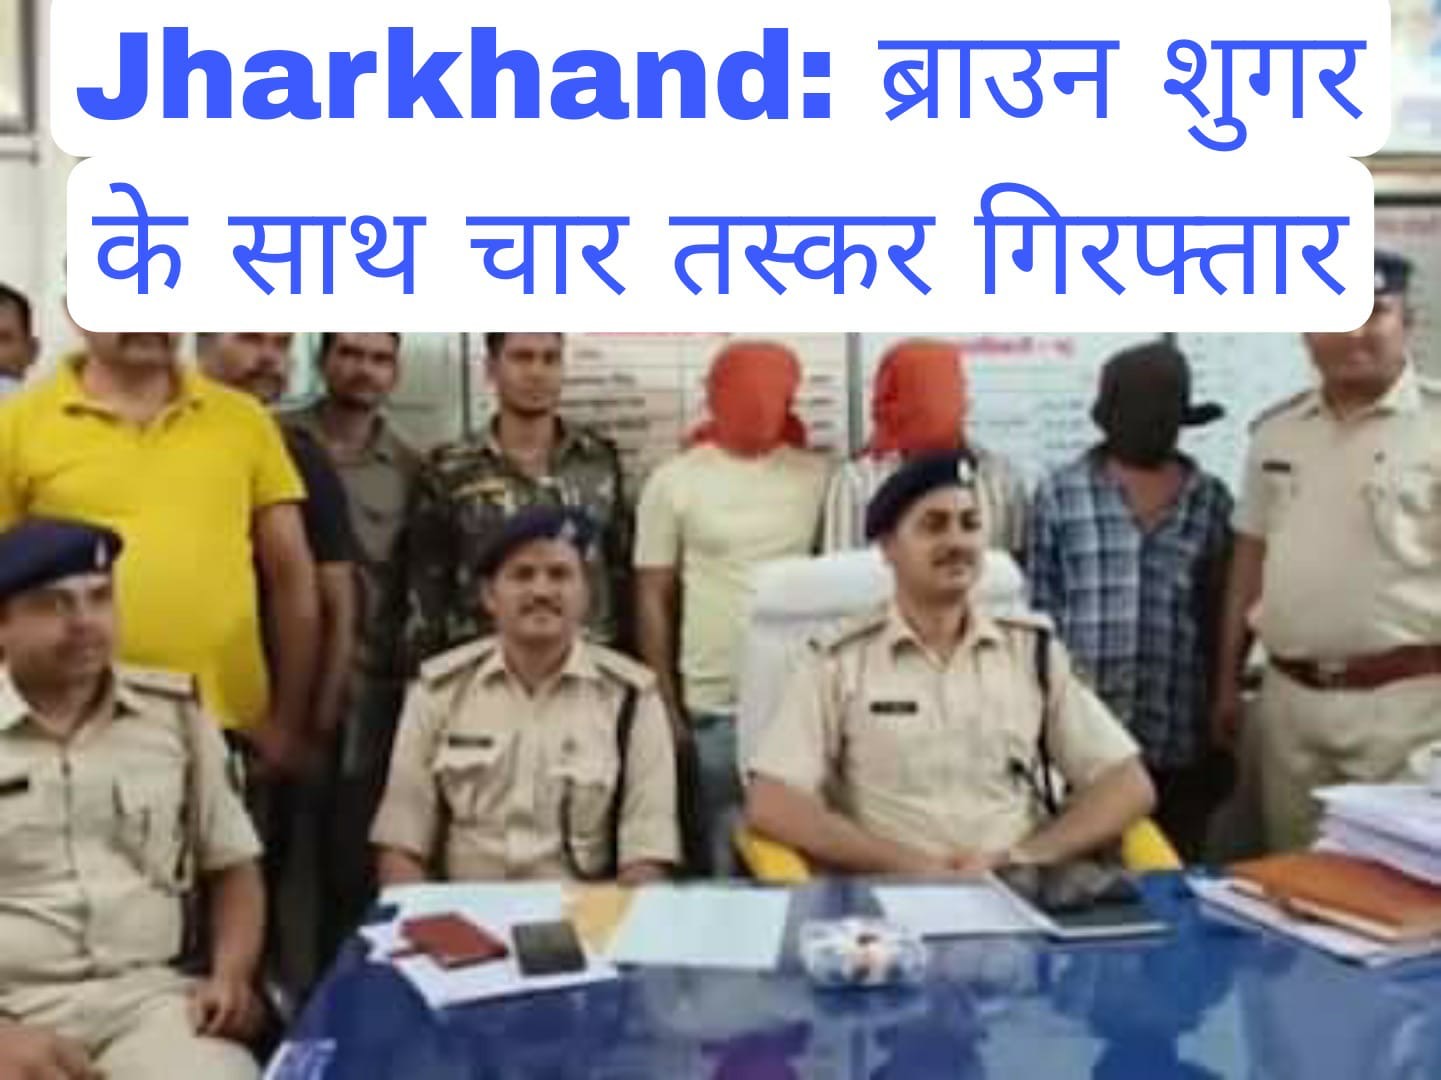 Jharkhand: ब्राउन शुगर के साथ चार तस्कर गिरफ्तार